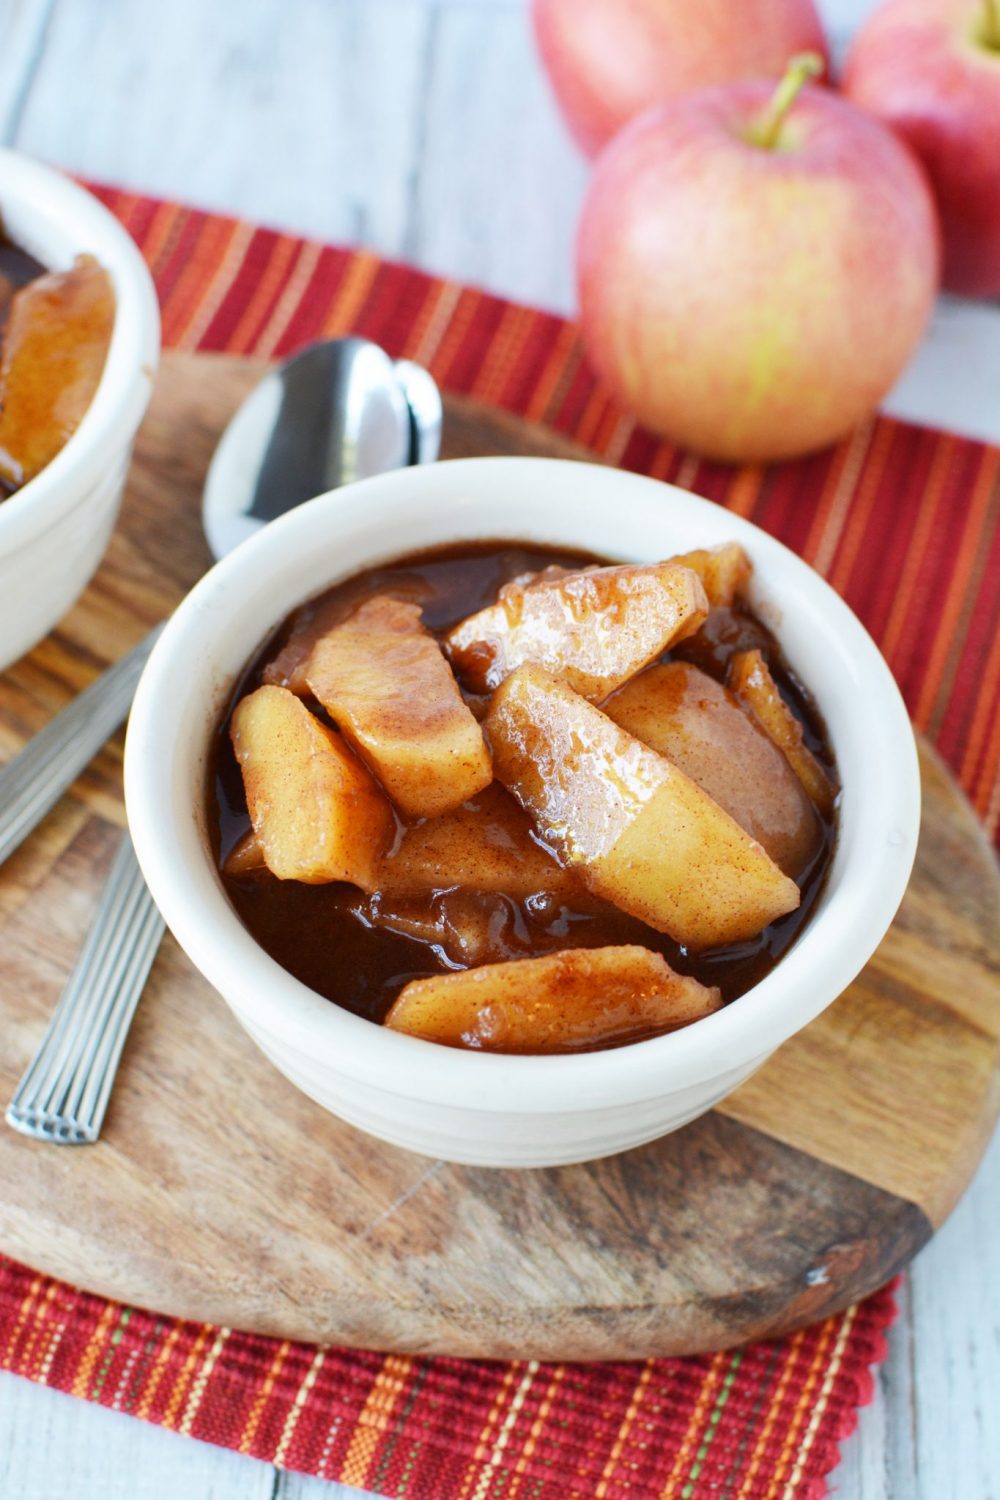 Slow Cooker Cinnamon Apples Recipe